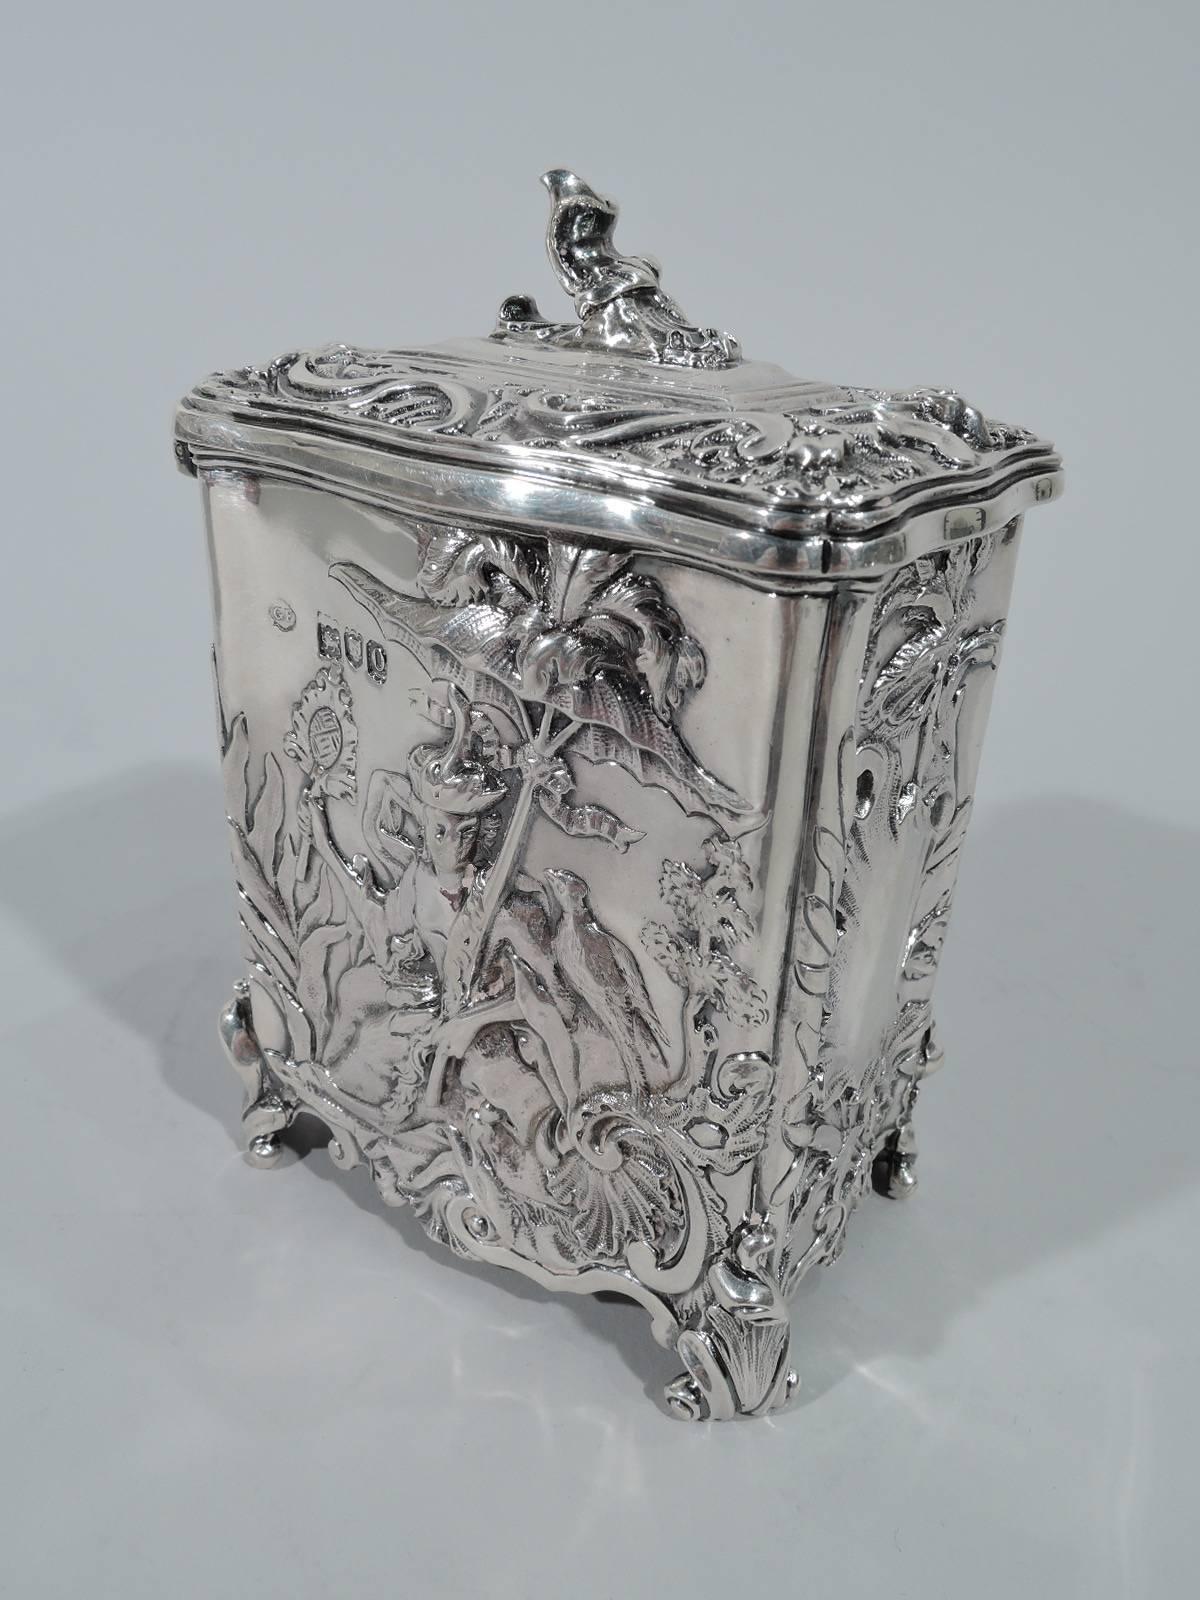 Rococo Revival Antique English Edwardian Rococo Sterling Silver Tea Caddy by George Fox